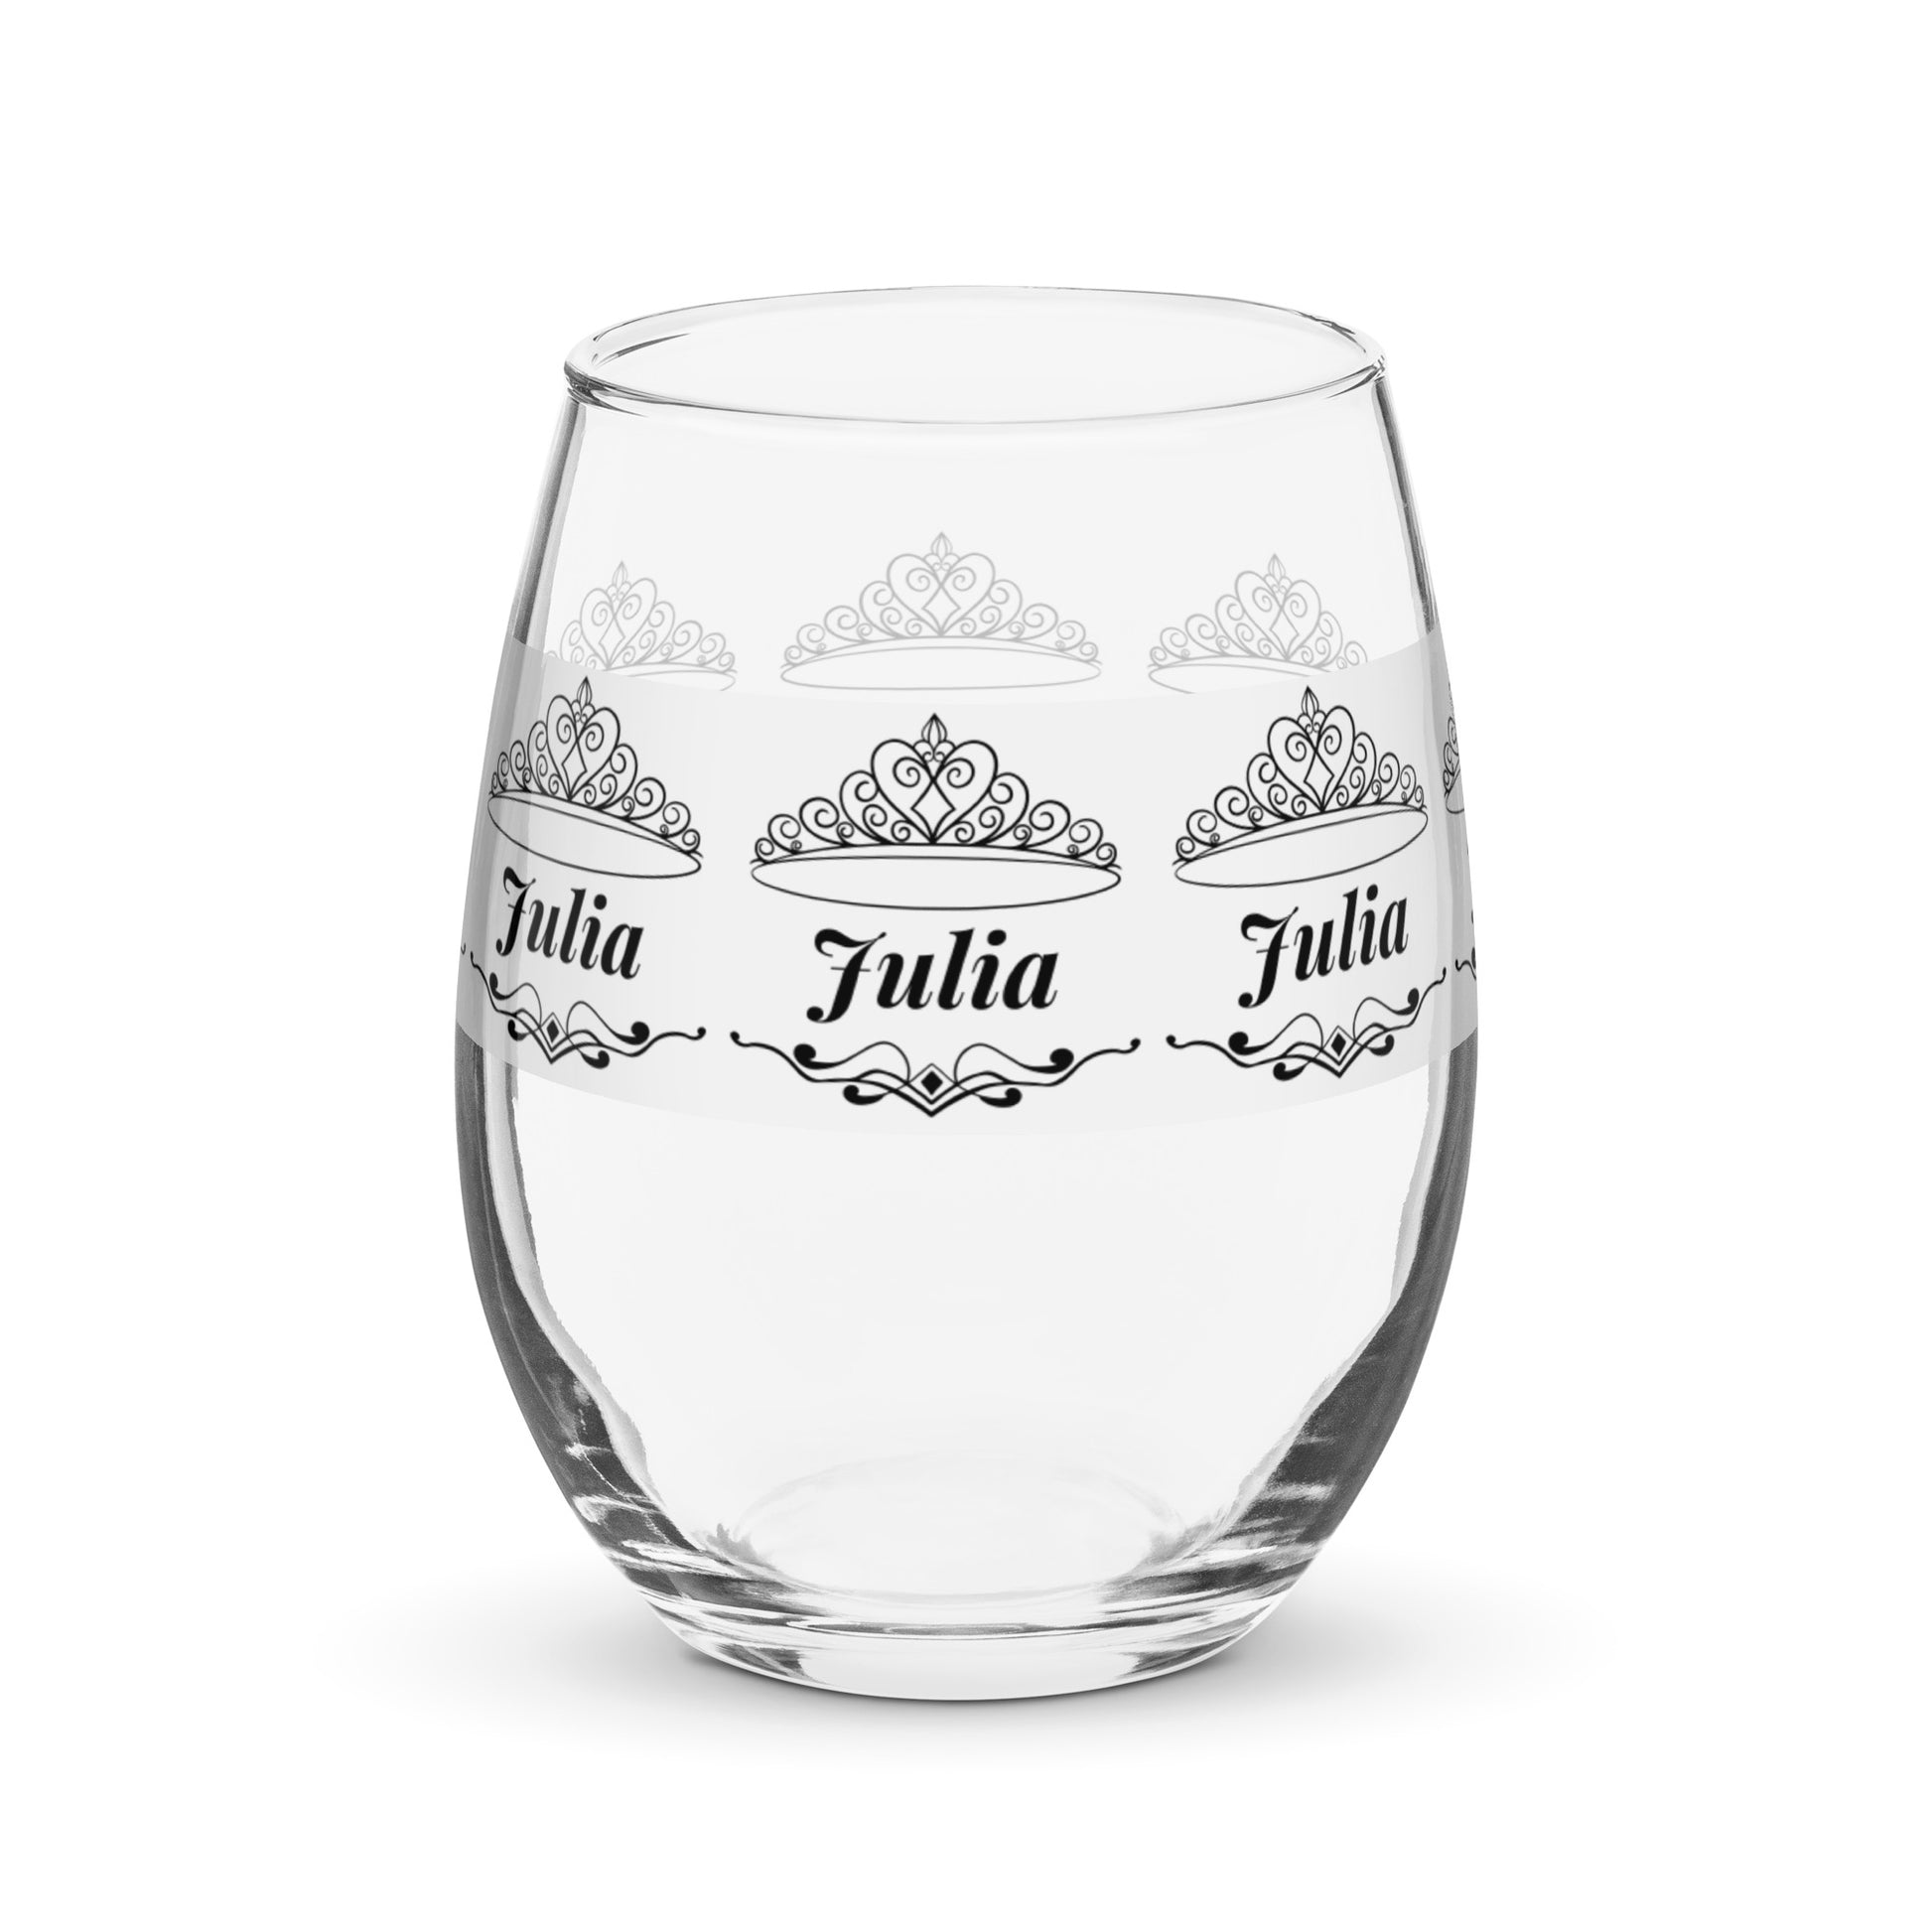 Julia name wine glass personalized wine glass wine glass